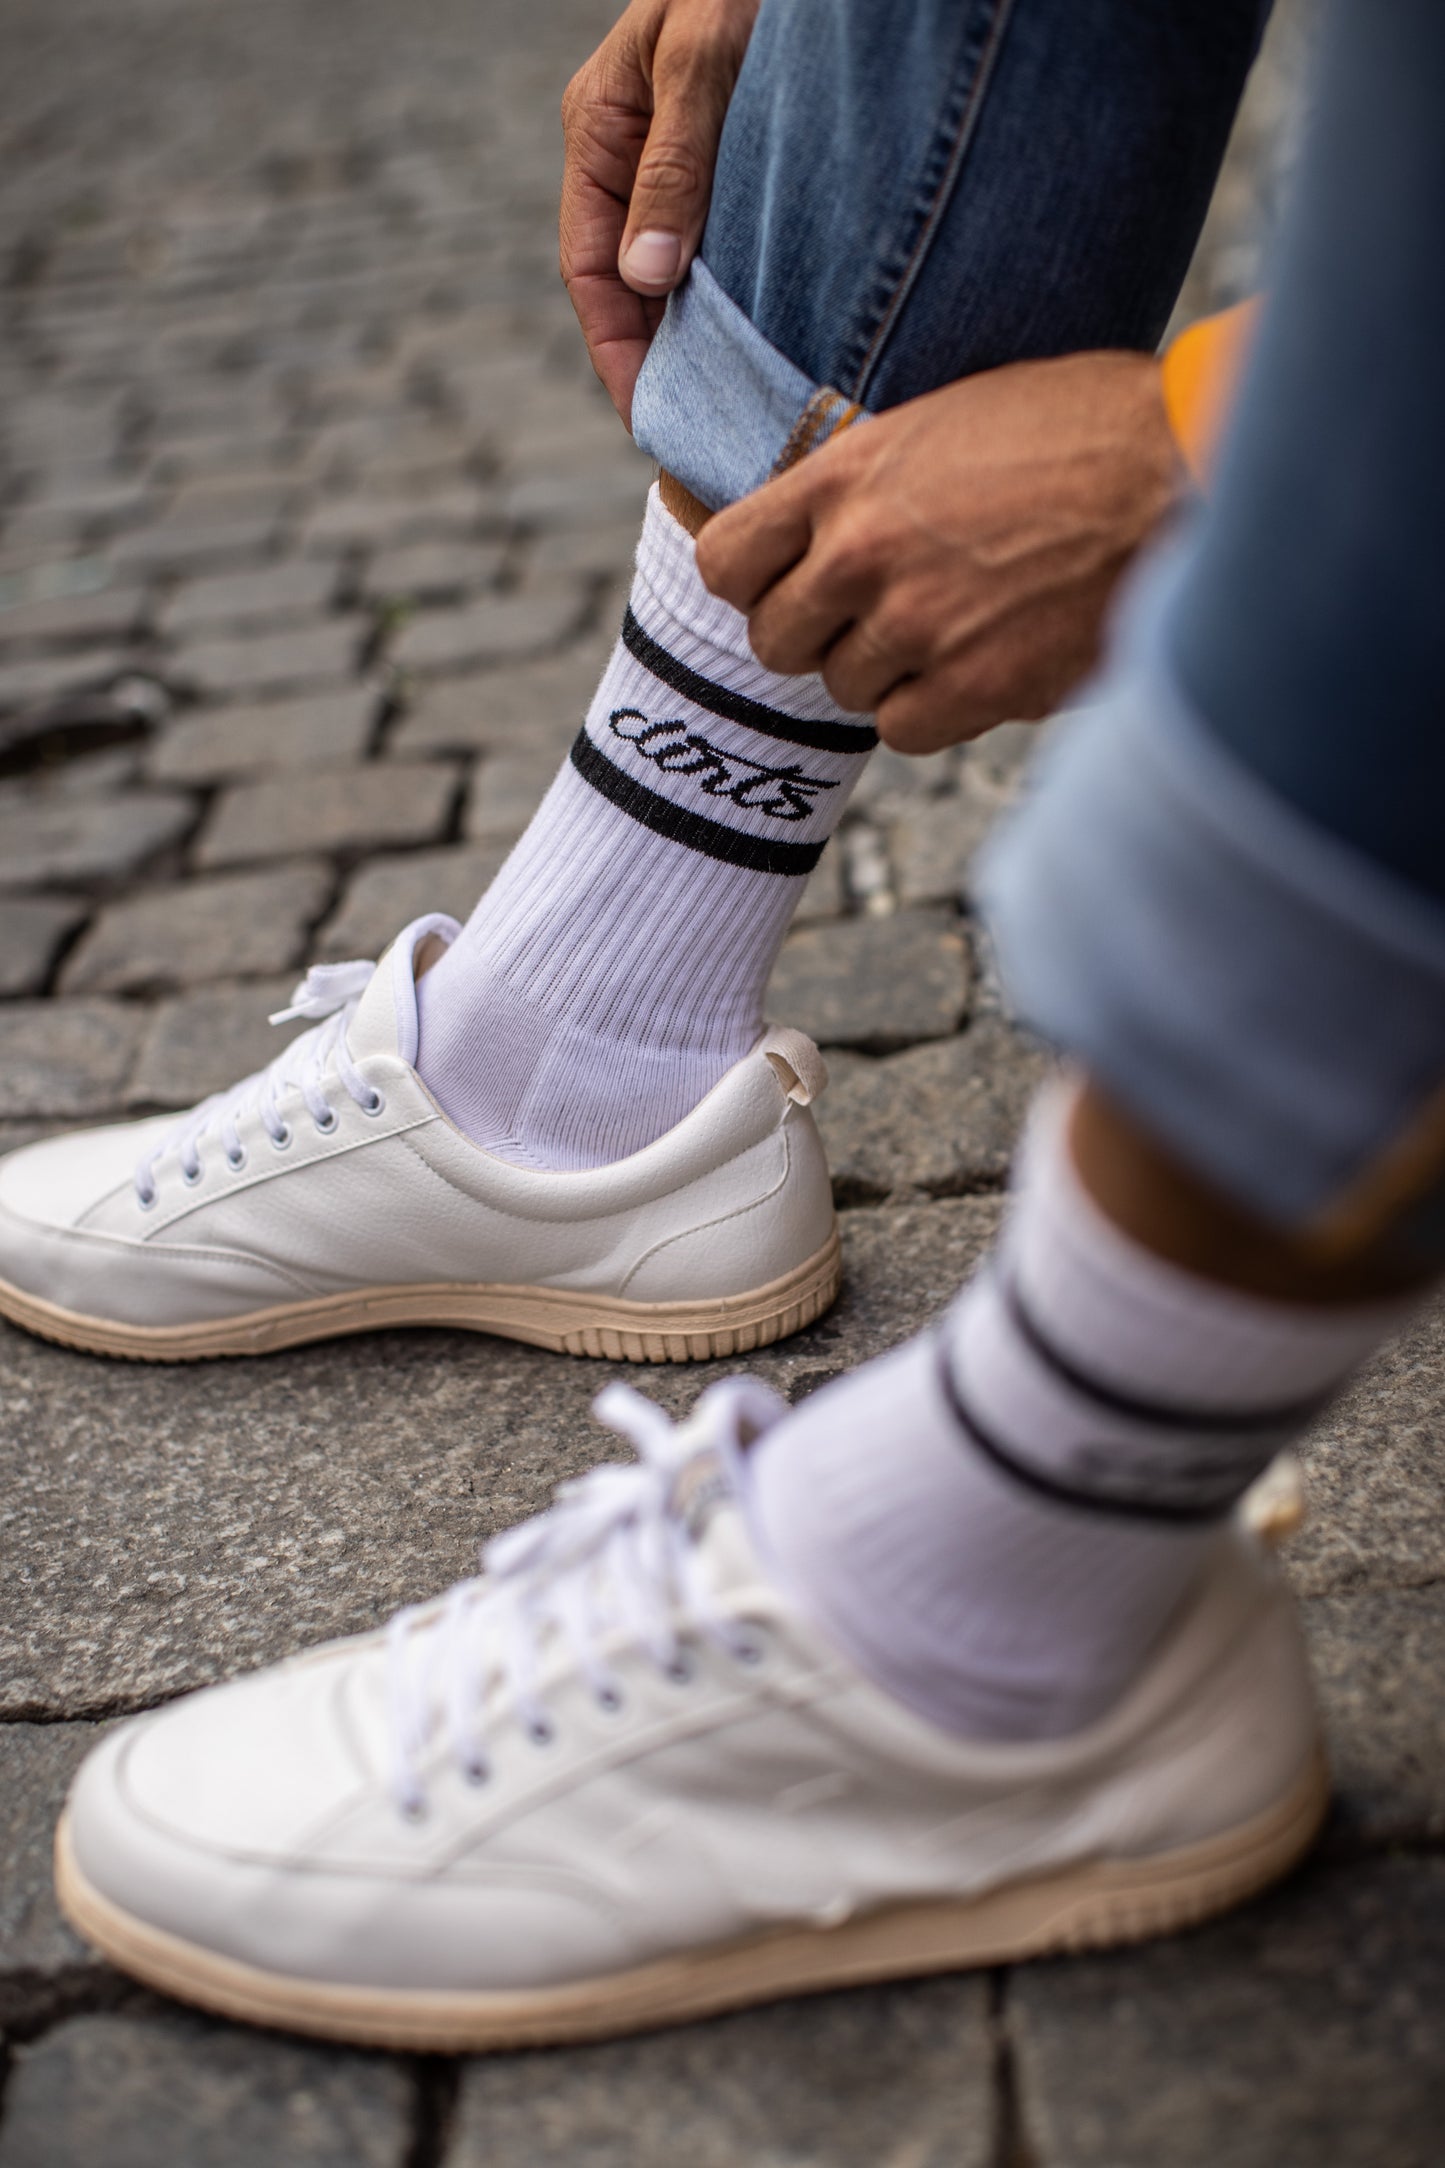 Classic striped socks, white